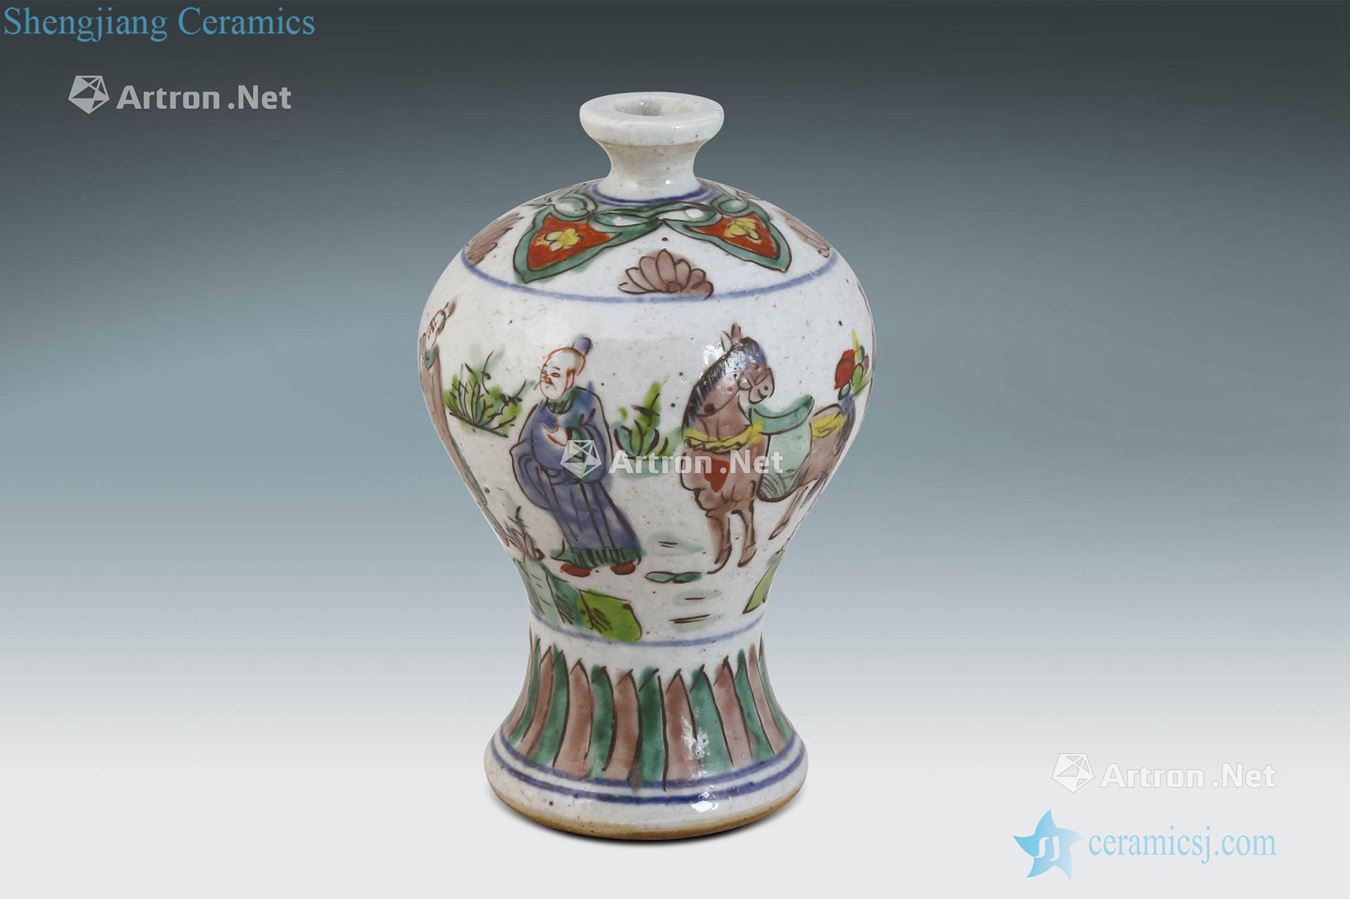 Qing grain porcelain colorful characters